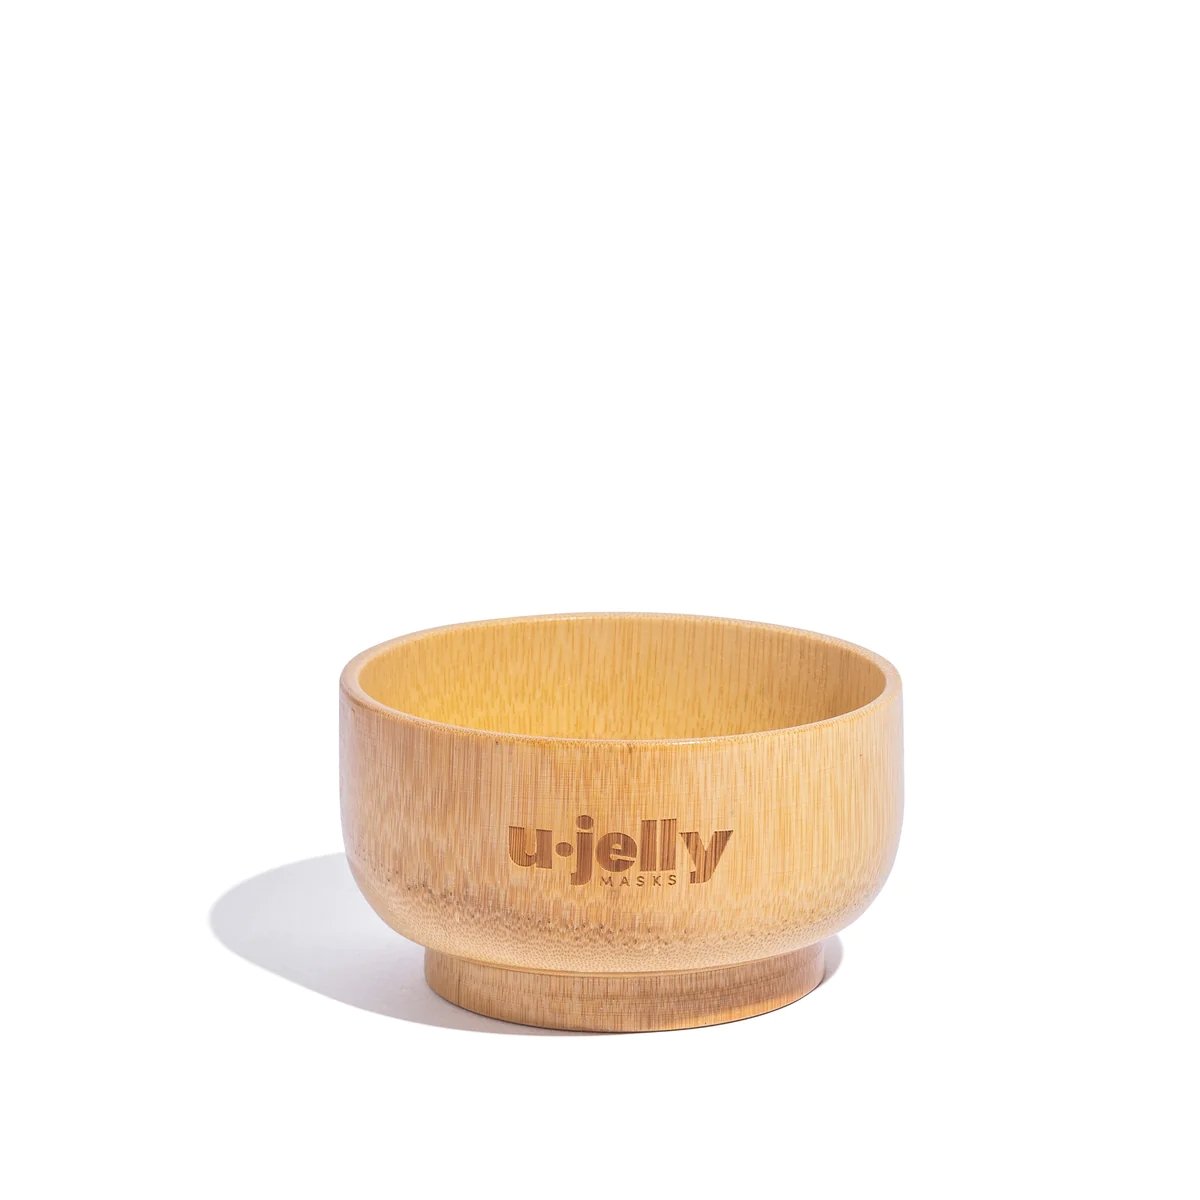 Jelly Face Mask Bamboo Mixing Bowl -The Mountain Merchant -U Jelly Masks